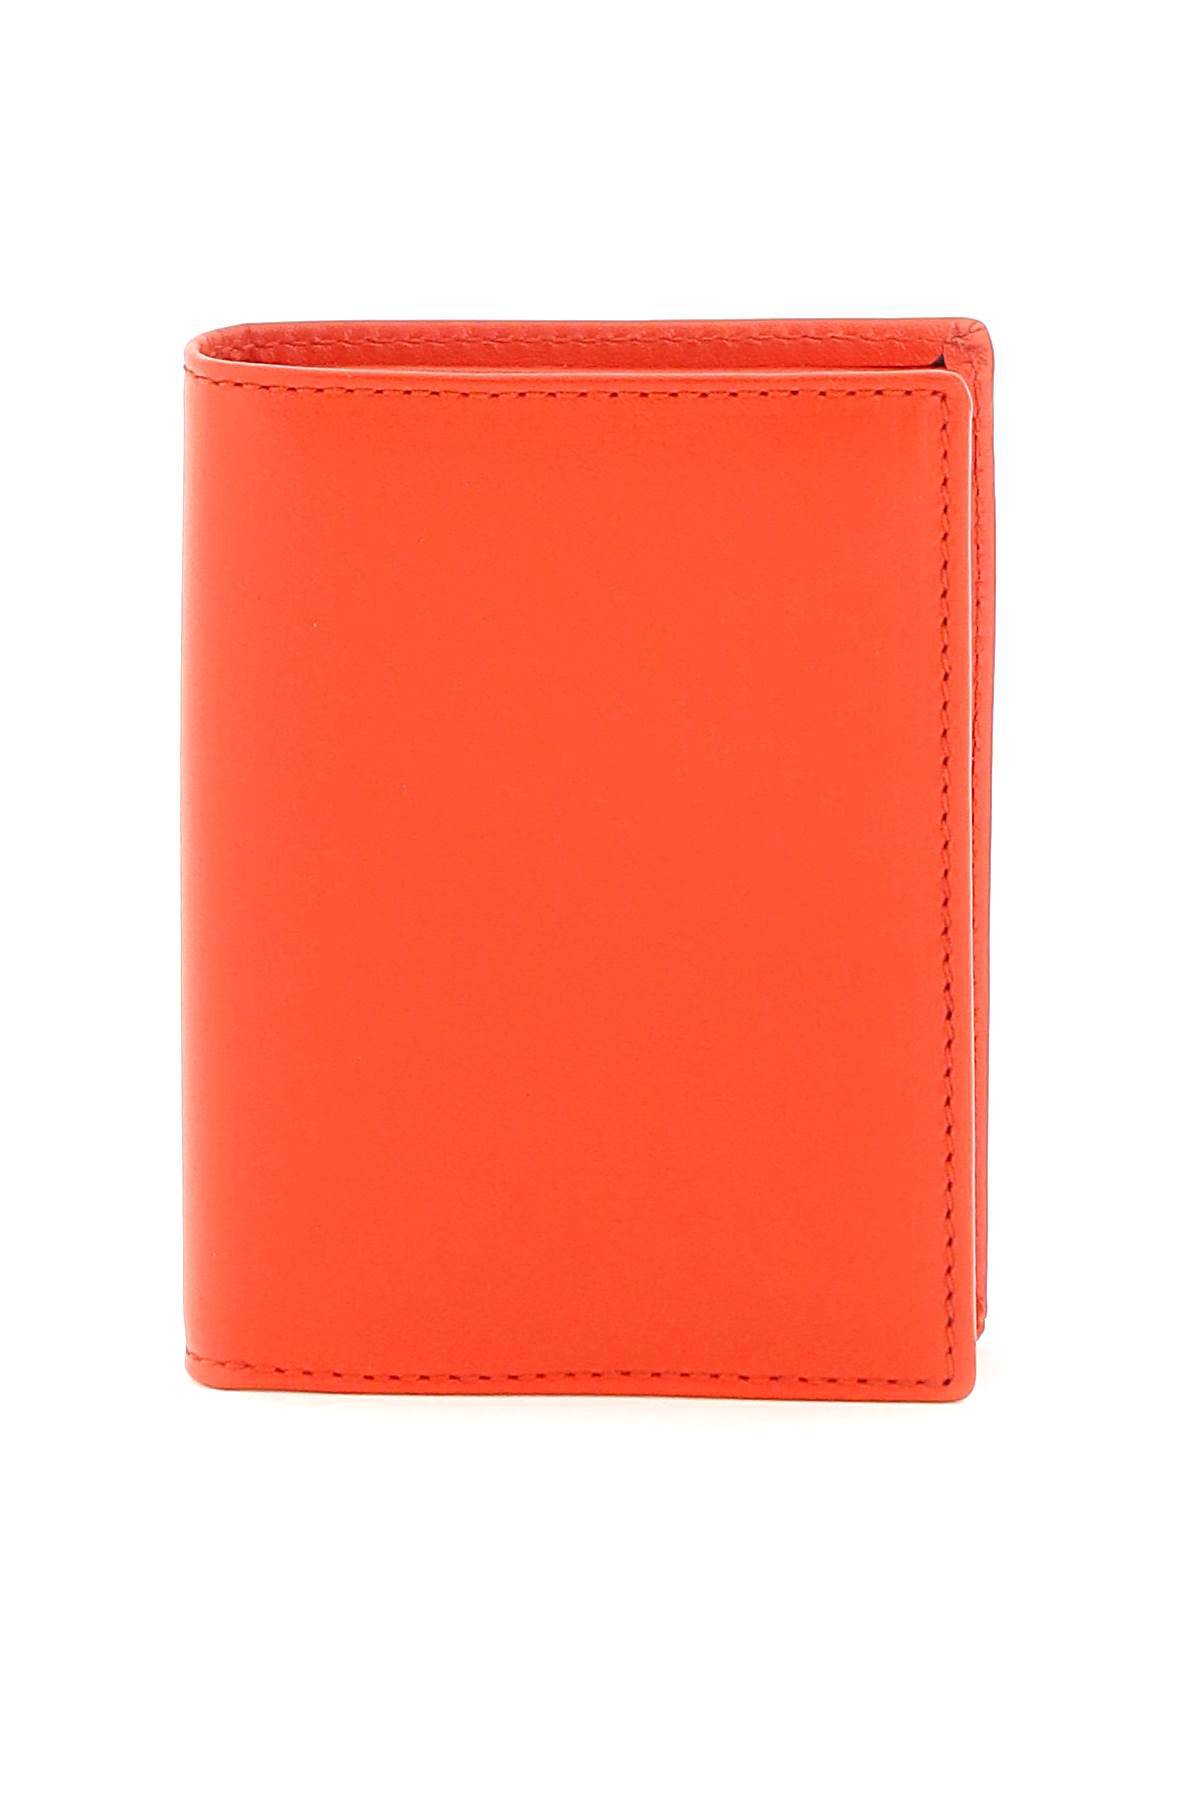 COMME DES GARCONS WALLET COMME DES GARCONS WALLET leather small bi-fold wallet